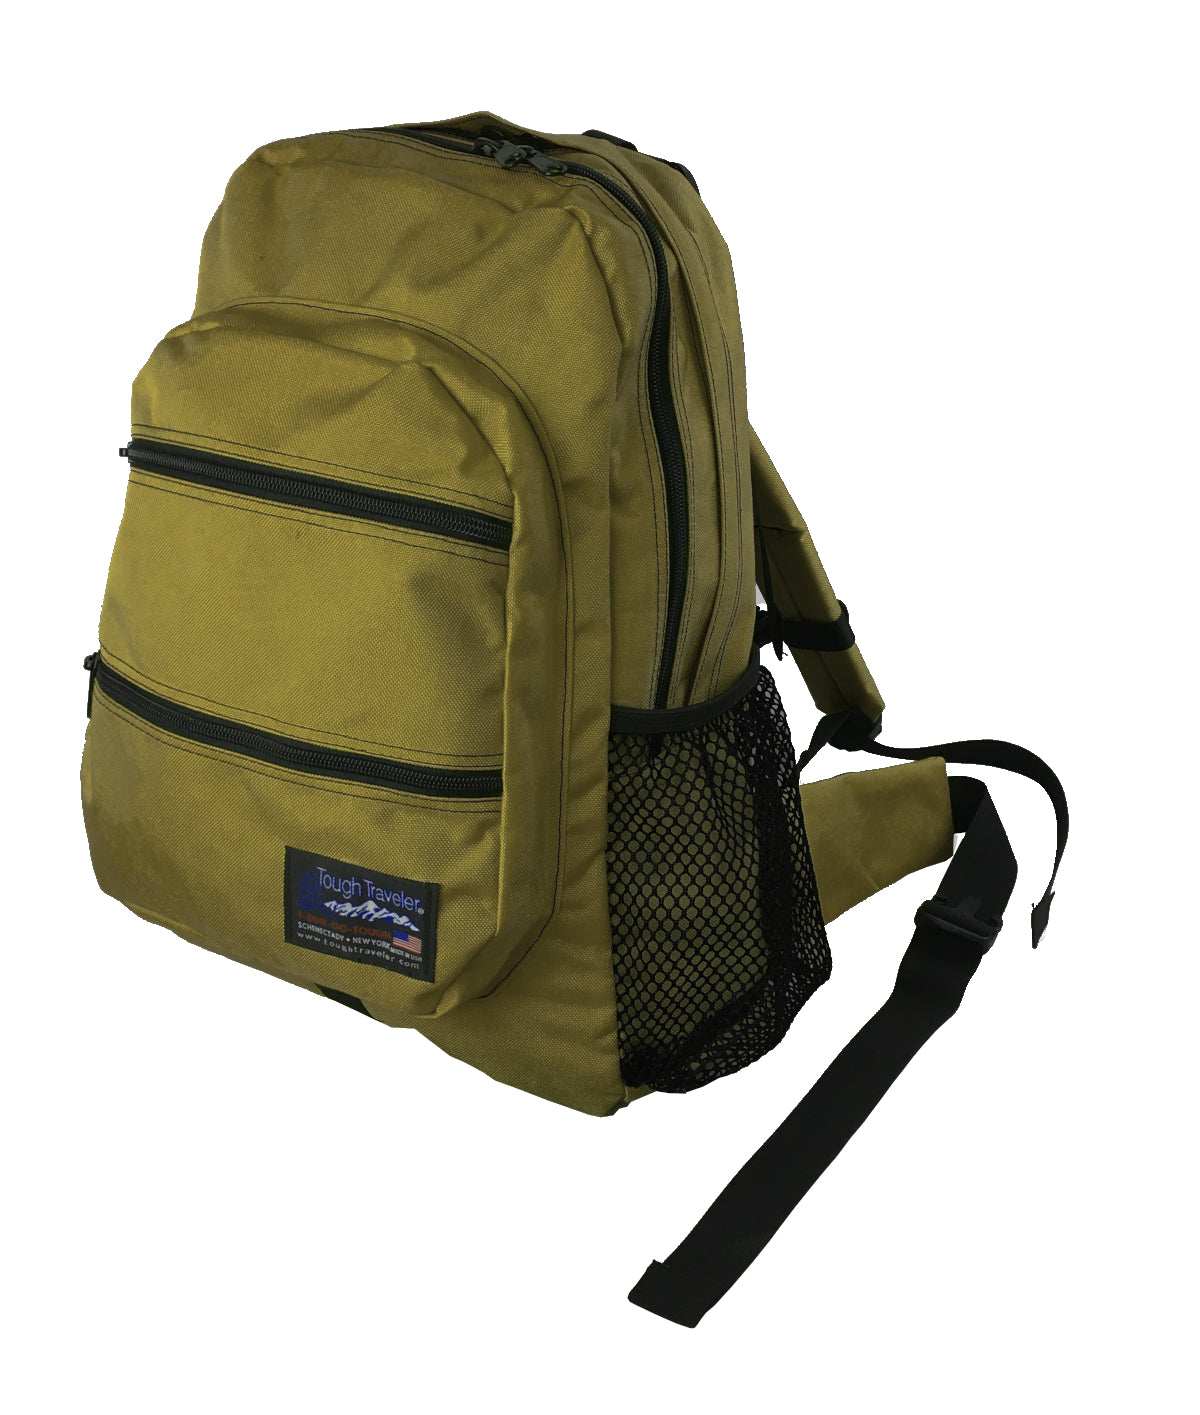 Buy Sling Shoulder Bag, Sling Backpack Sturdy Ergonomic Large Capacity  Multifunction Breathable Detachable Water Bottle Pocket D for Daily (Blue)  at Amazon.in